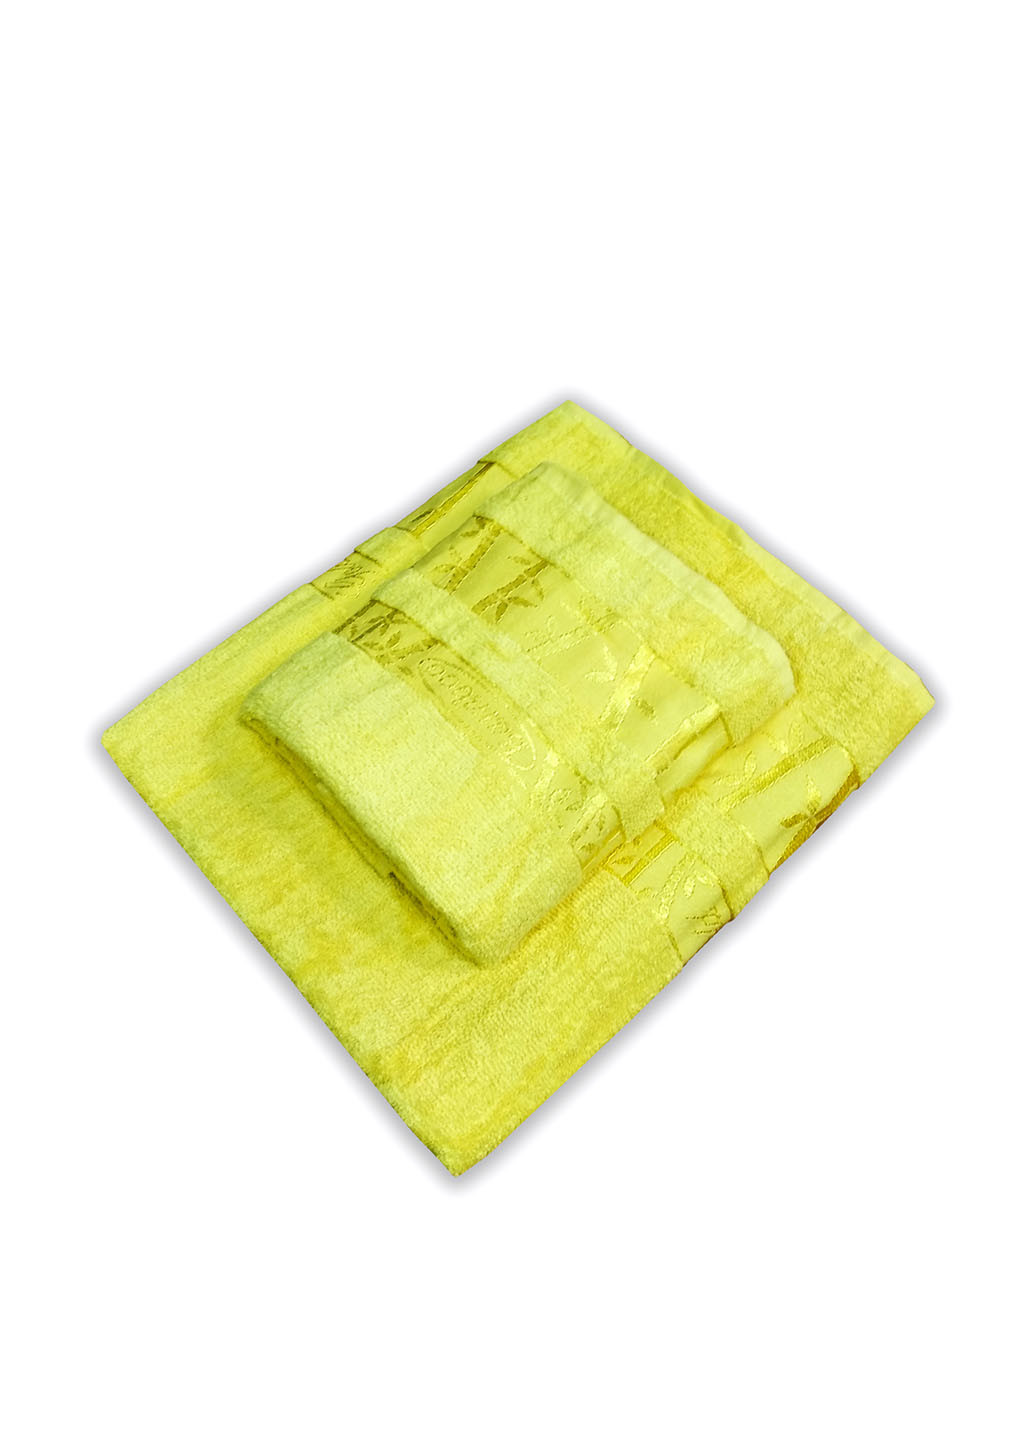 No Brand полотенце, 70х140 см рисунок желтый производство - Турция